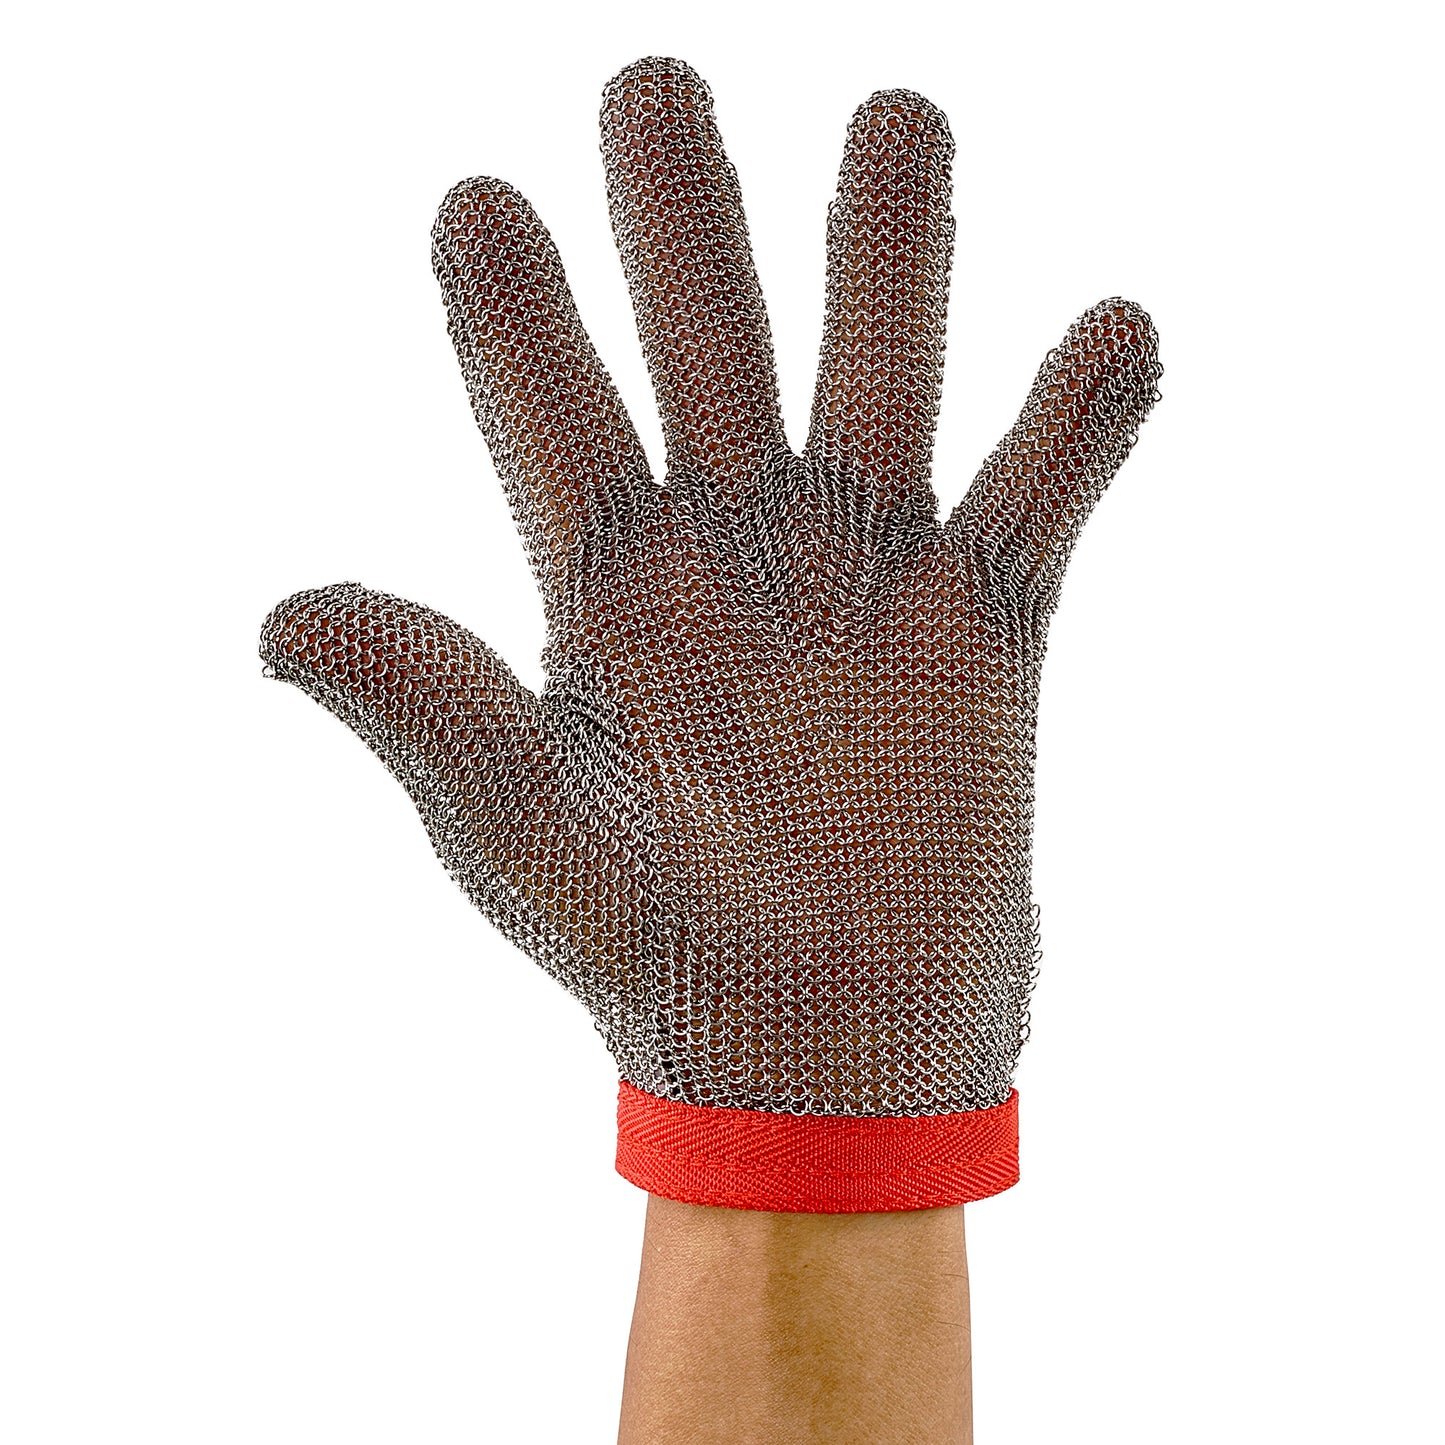 PMG-1M - Stainless Steel Protective Mesh Glove - Medium